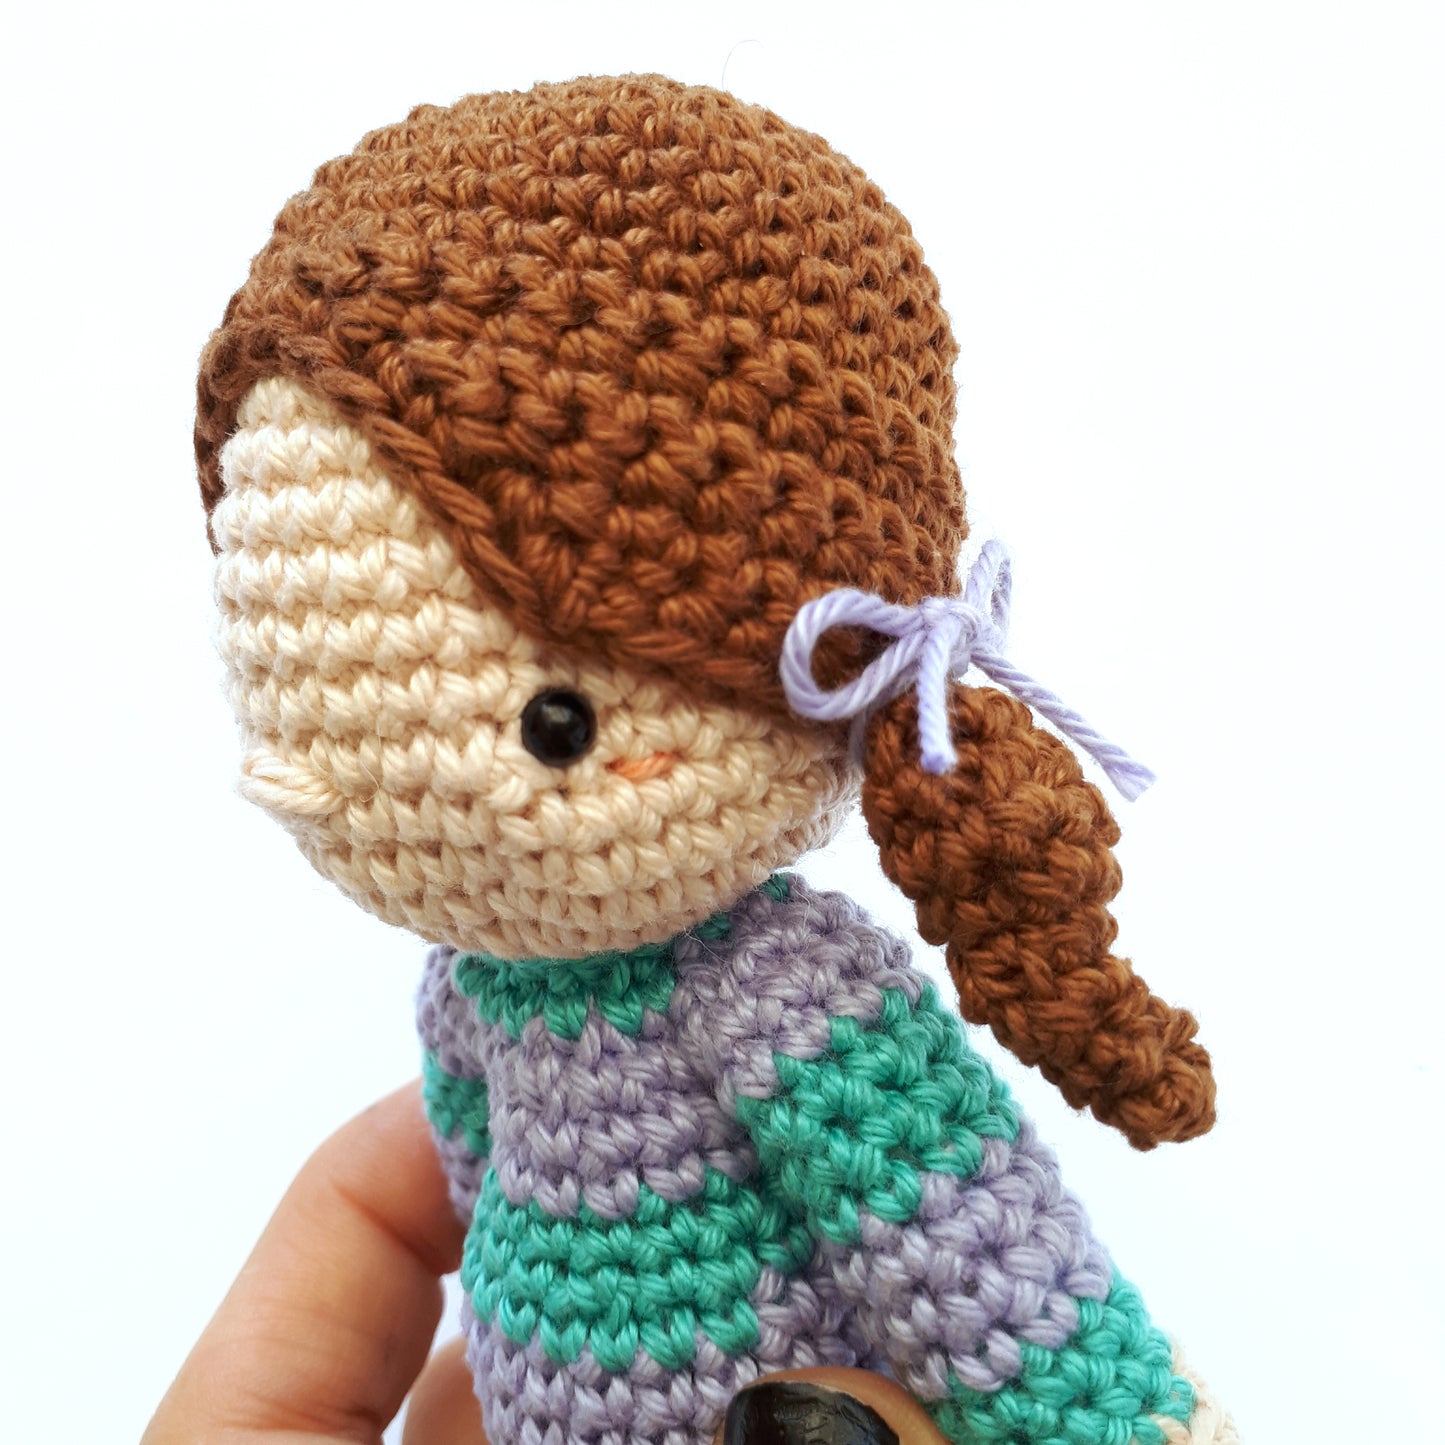 Sleepy Jenny amigurumi doll crochet pattern